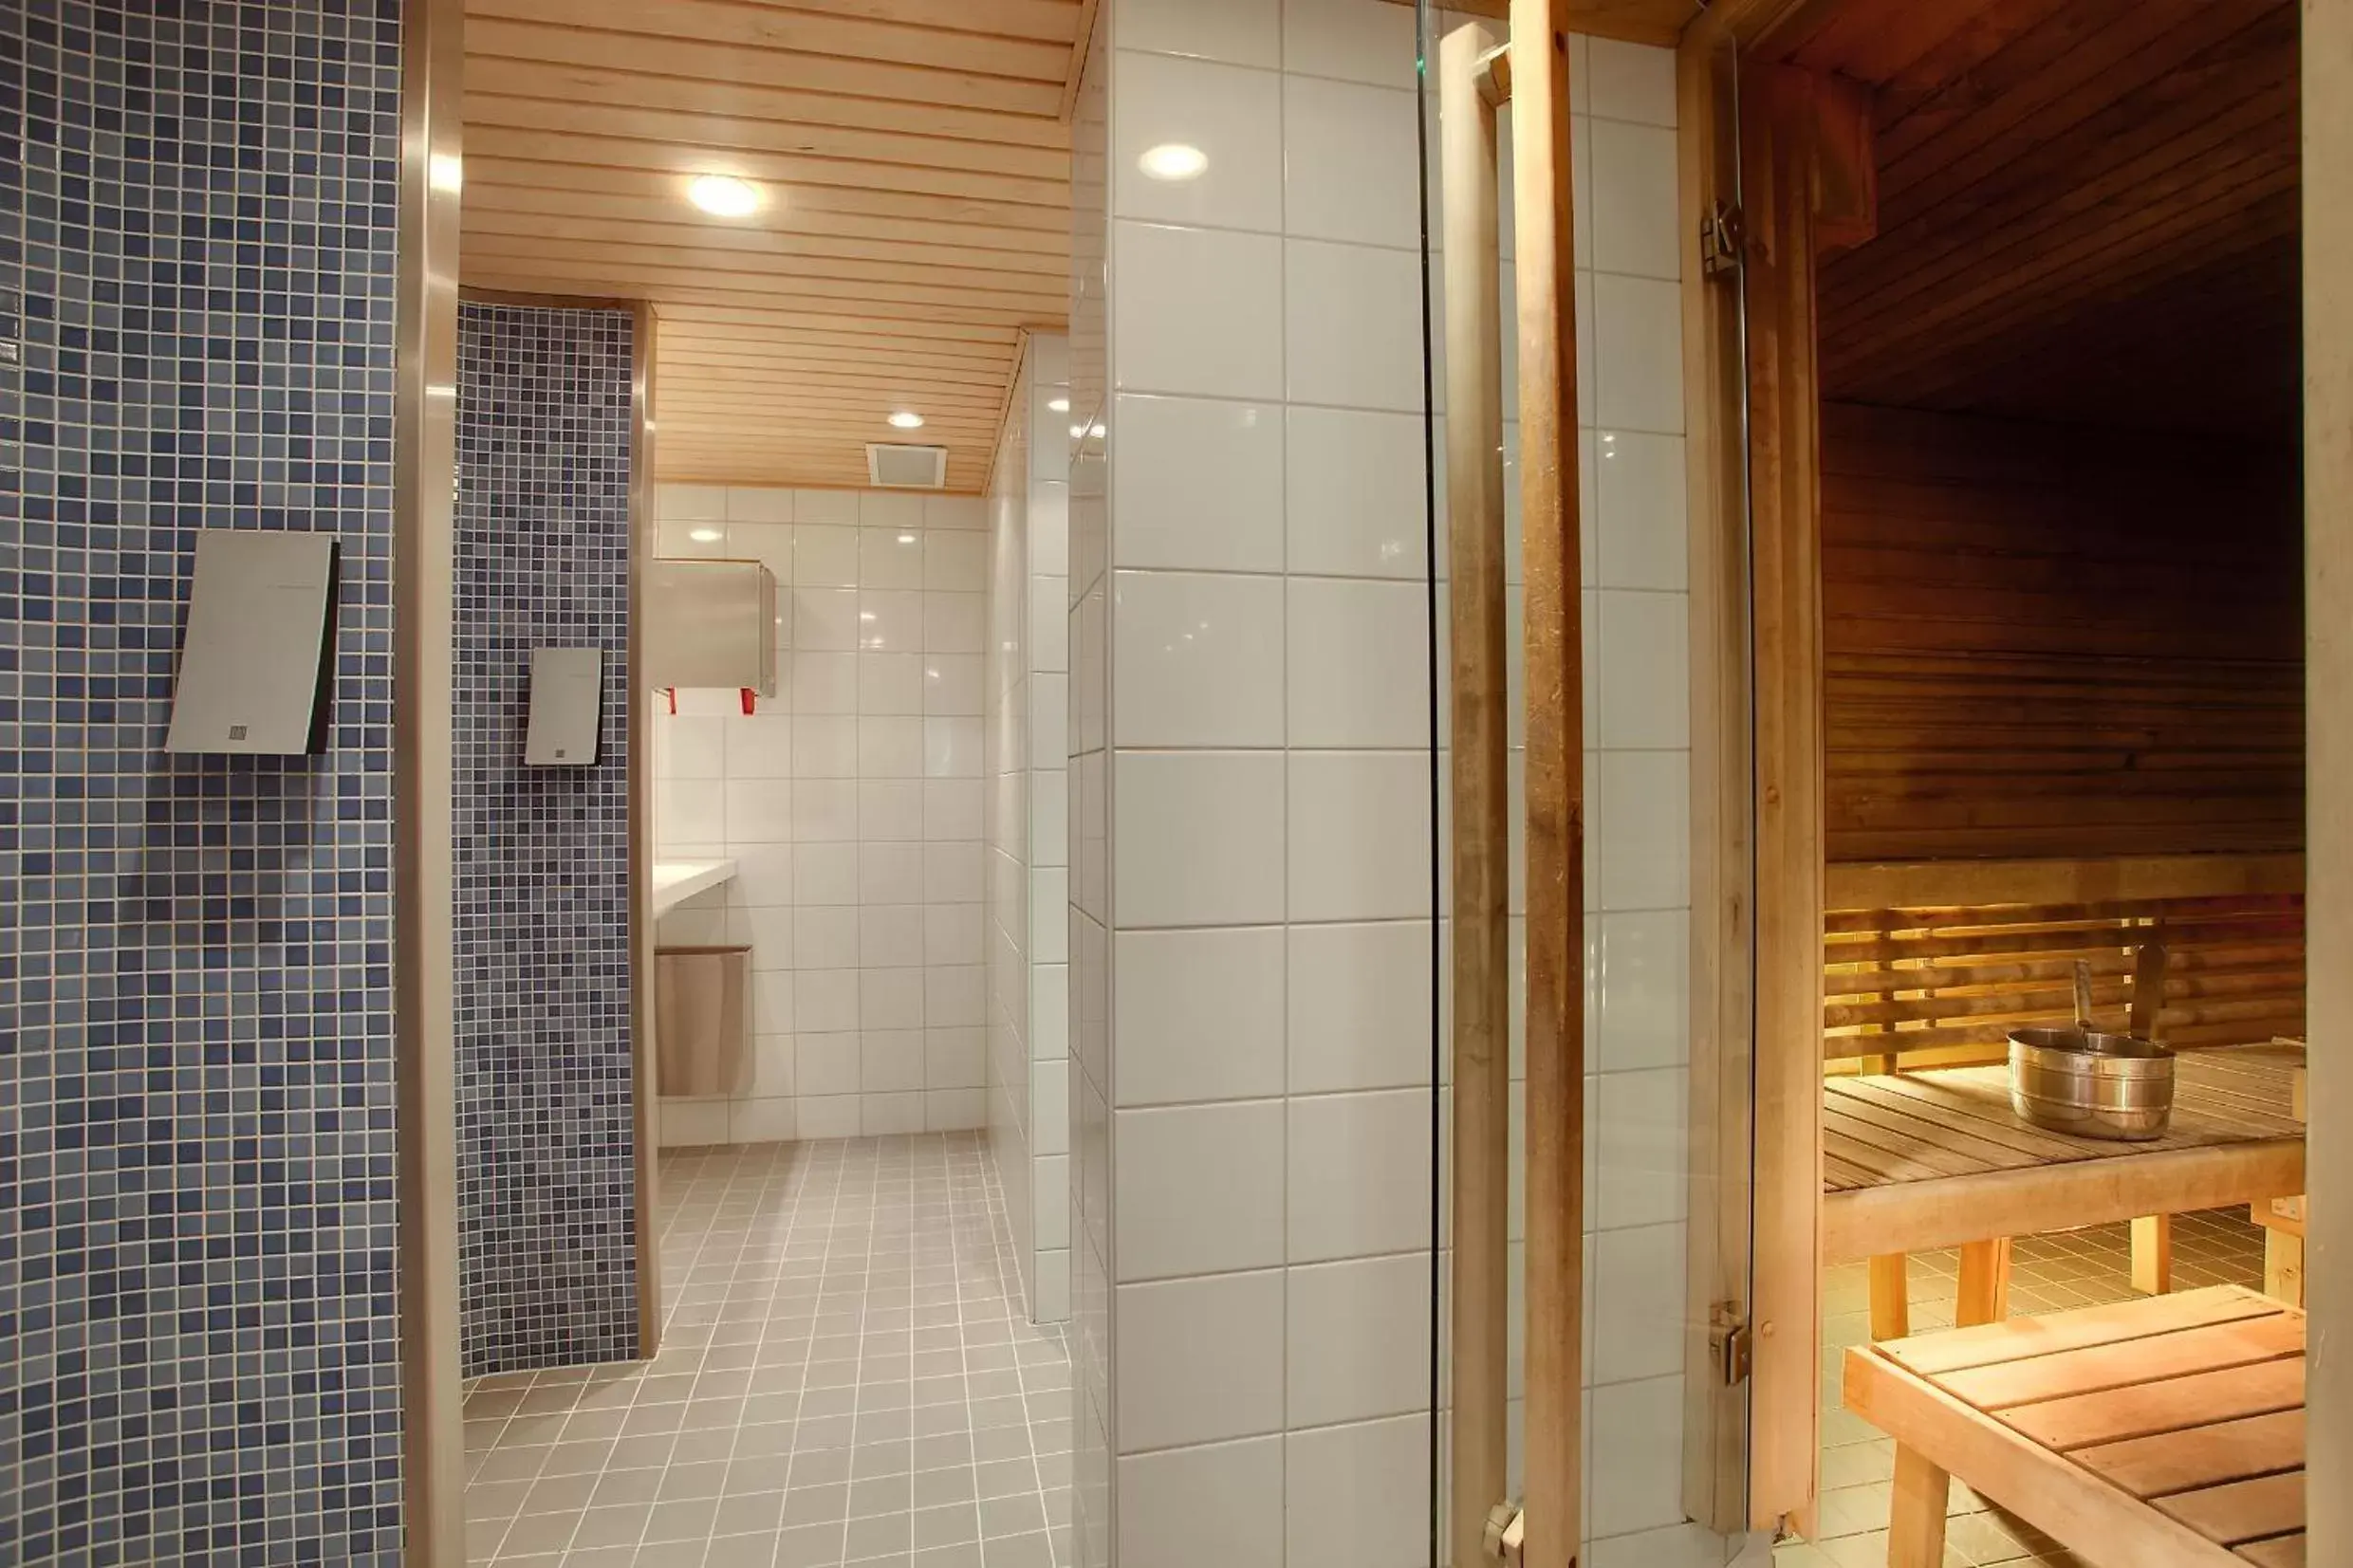 Spa and wellness centre/facilities, Bathroom in Original Sokos Hotel Vaakuna Vaasa